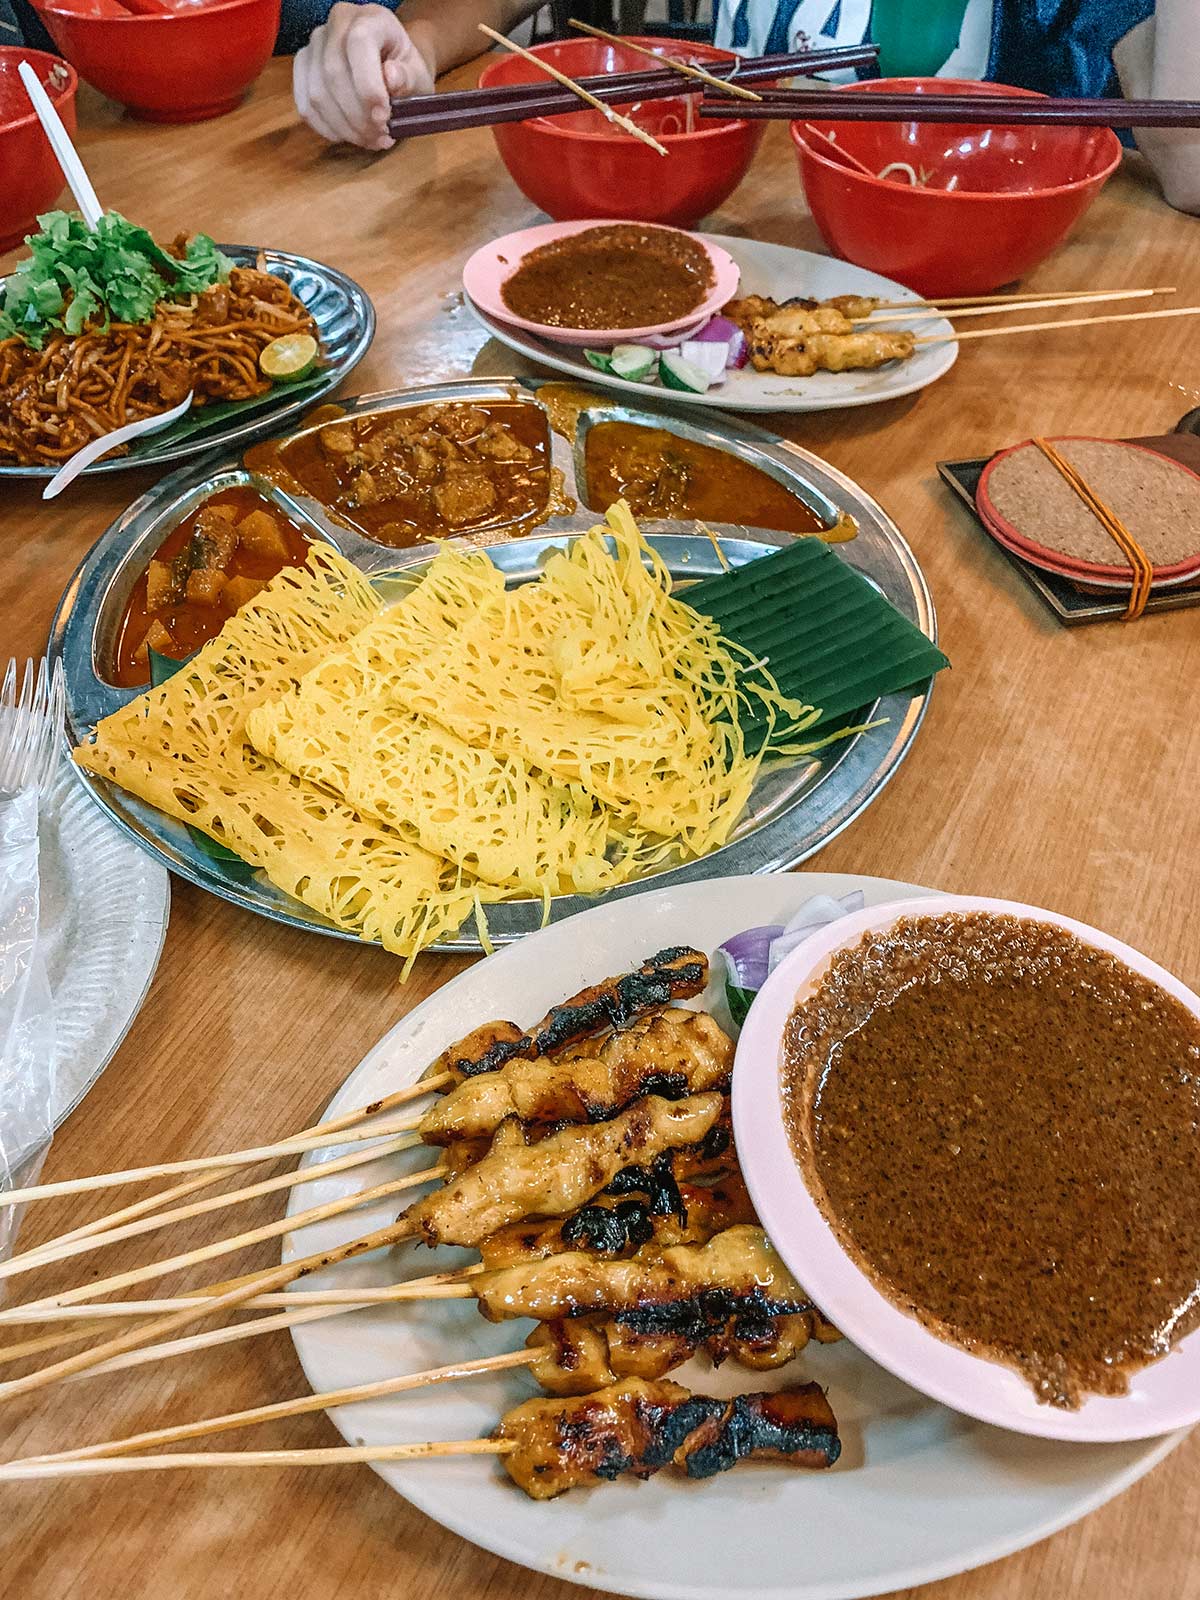 Penang food tour blog post